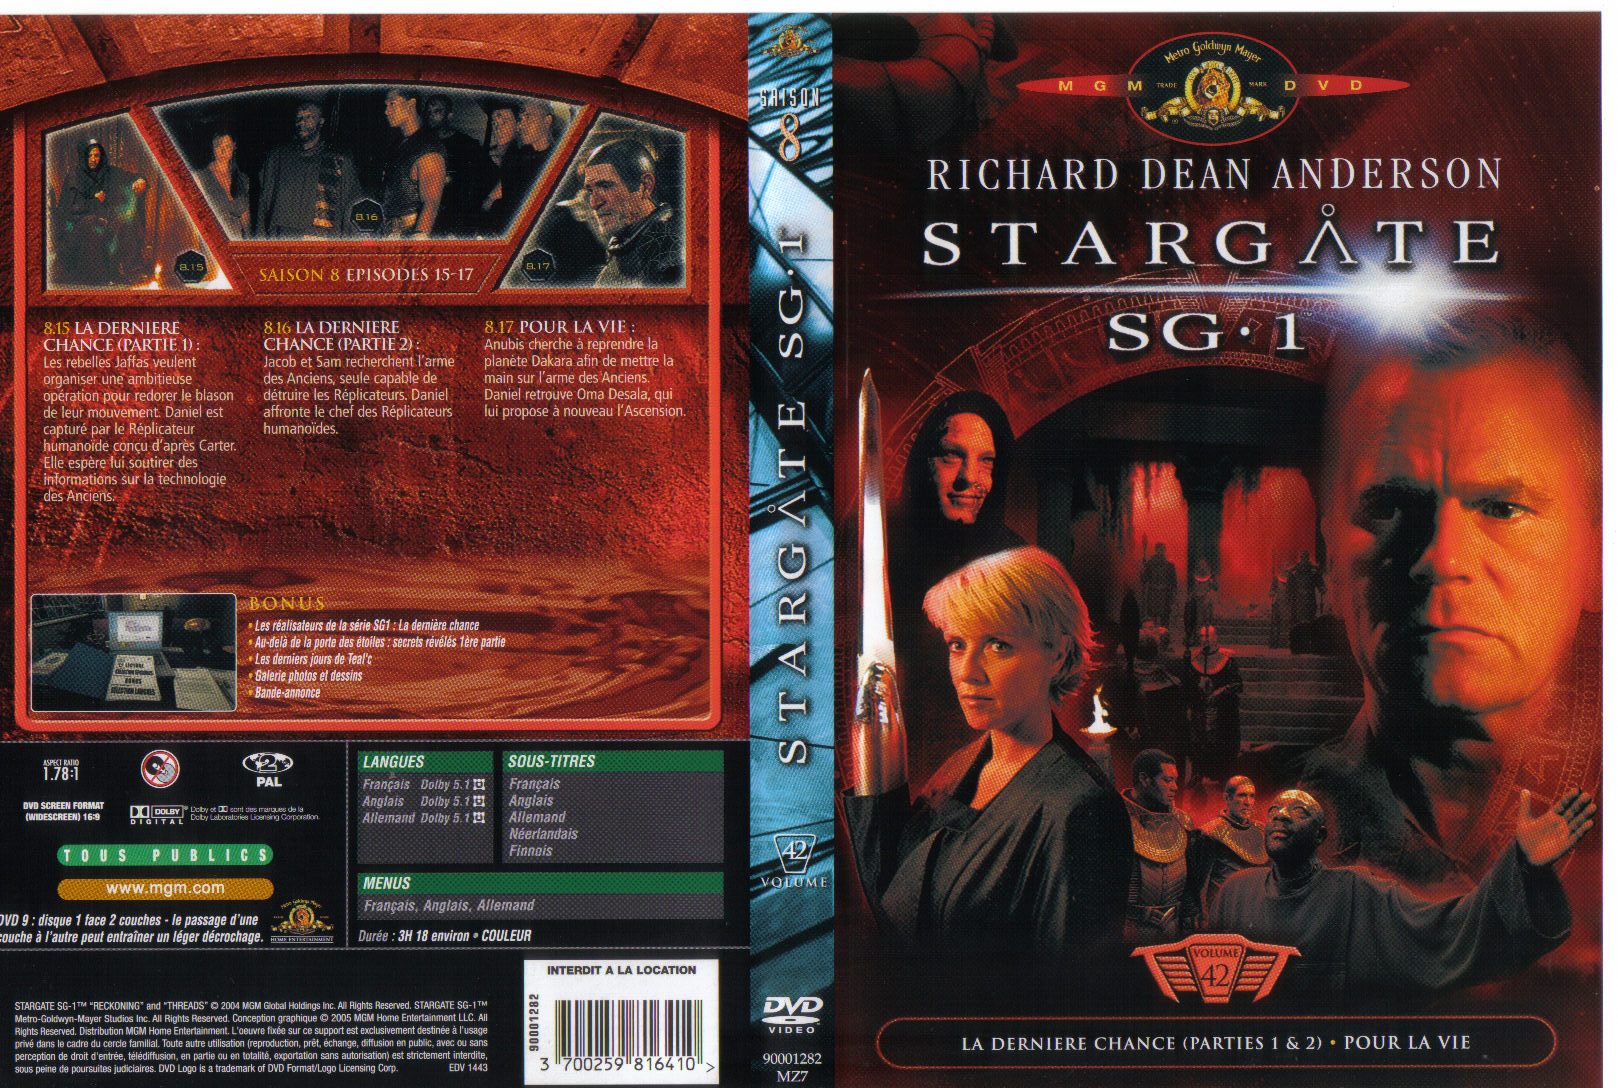 Jaquette DVD Stargate SG1 vol 42